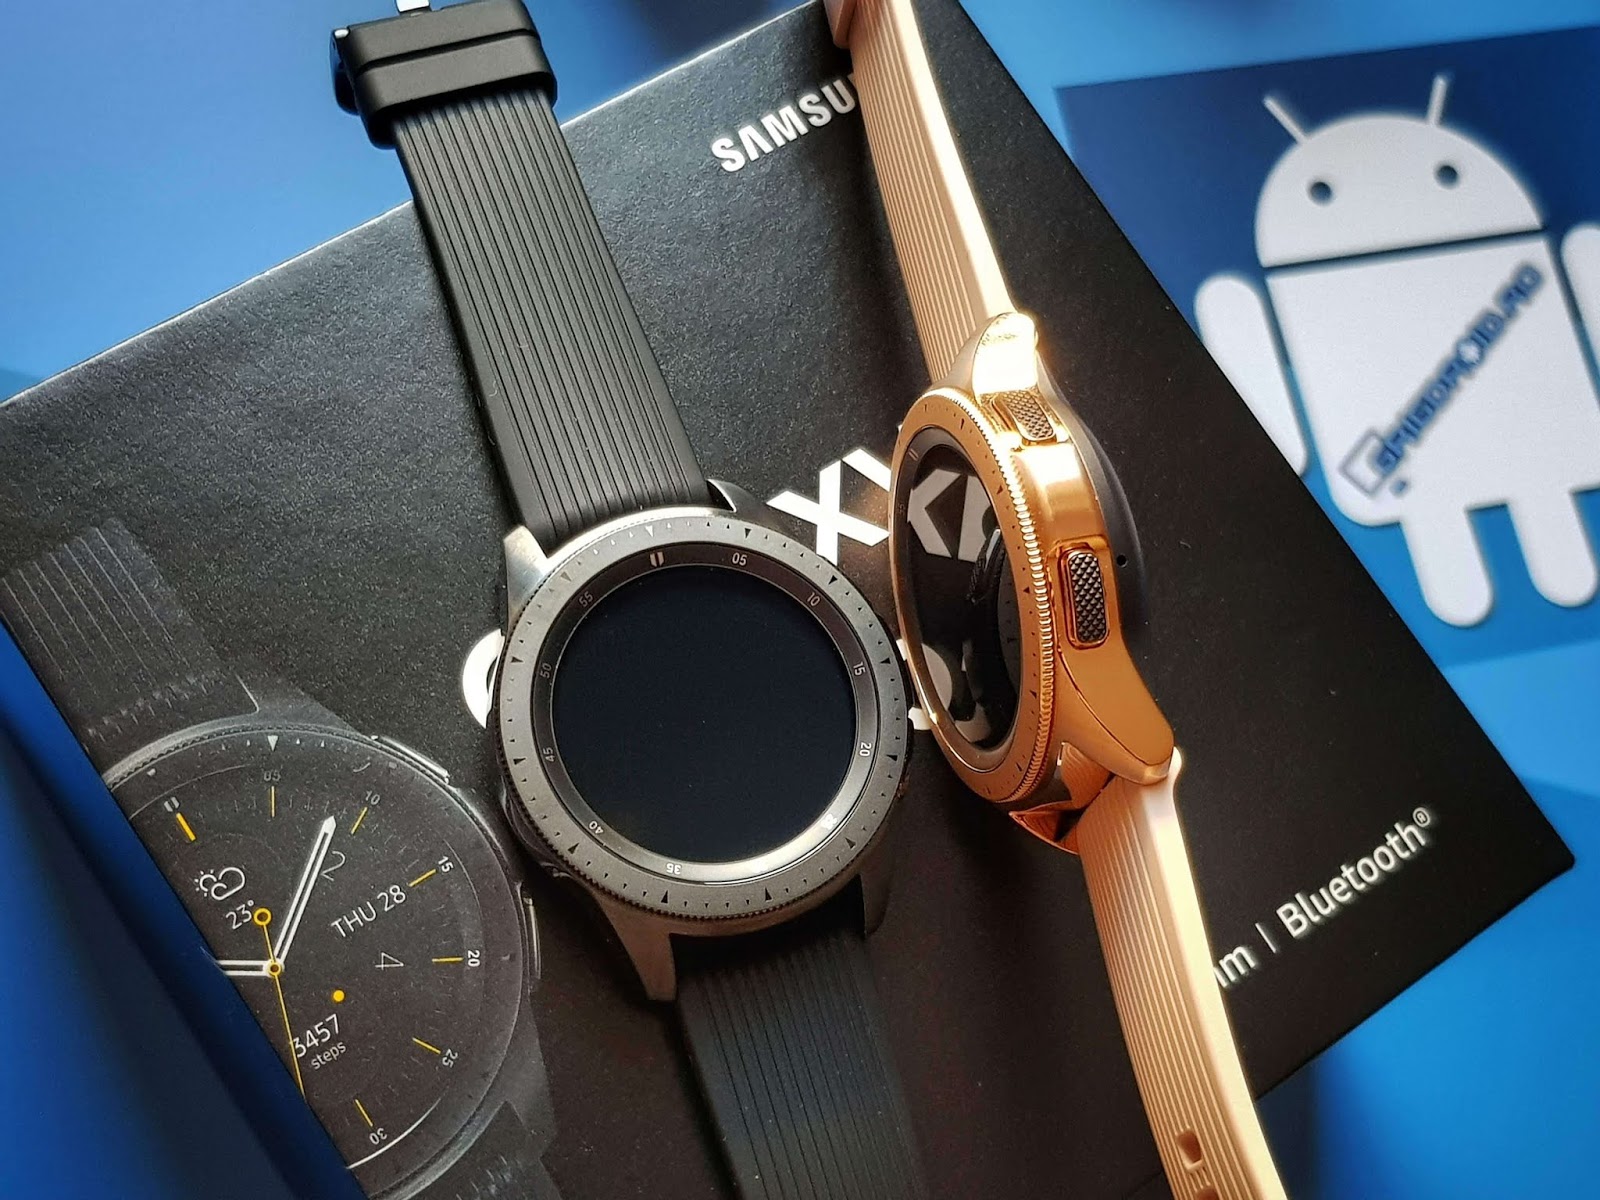 Samsung galaxy watch gold 40mm. Samsung watch 42mm. Galaxy watch 42mm. Самсунг часы галакси watch 42mm. Samsung Galaxy watch SM-r800.